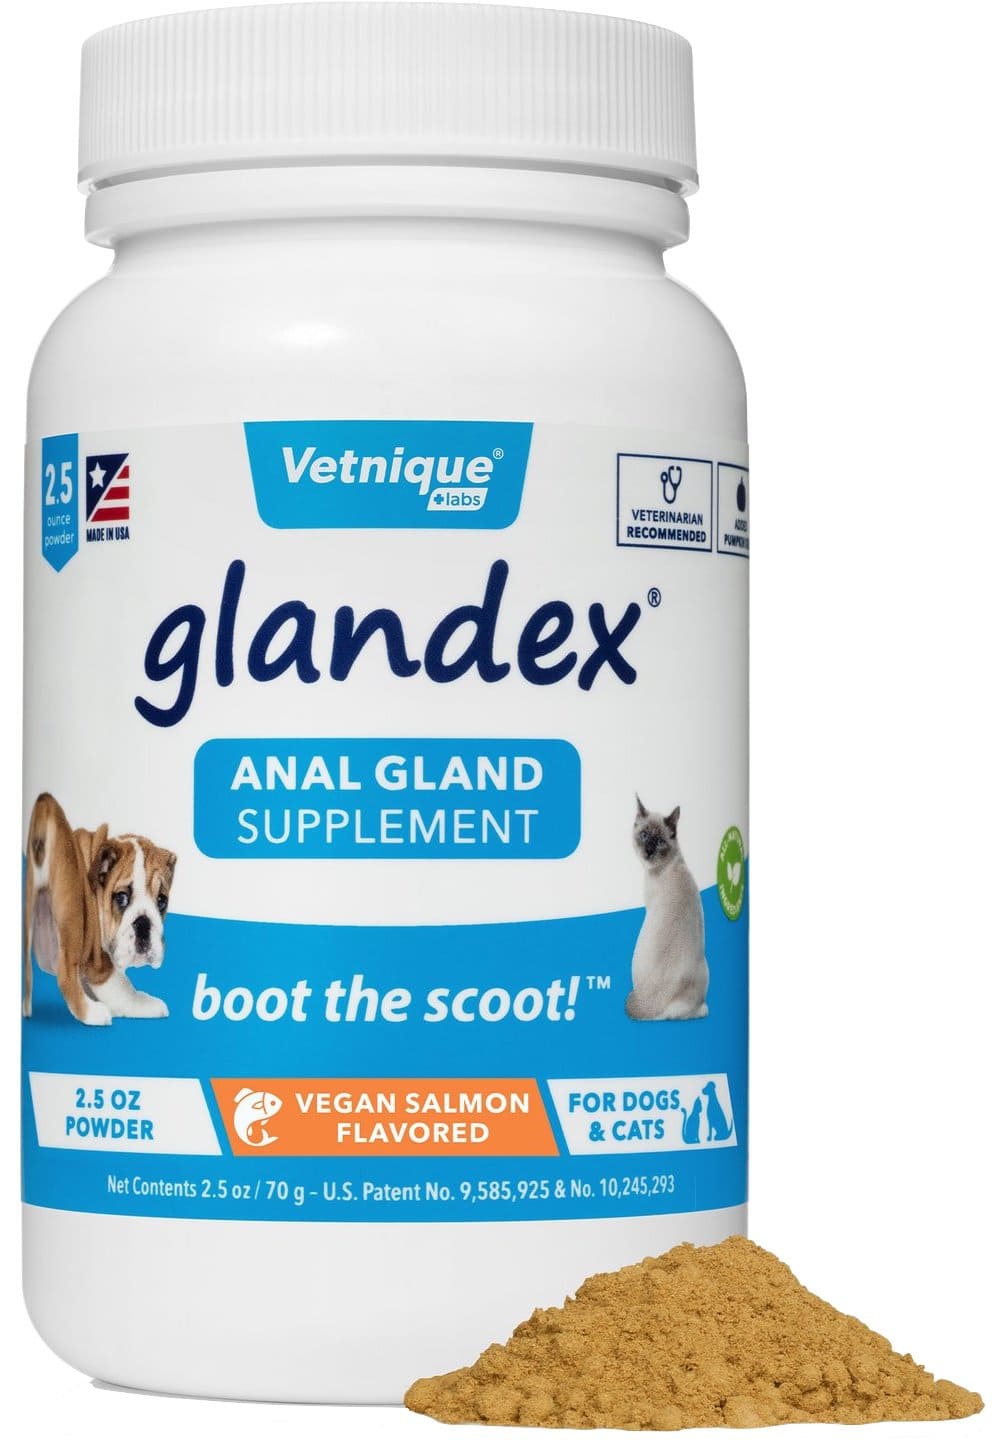 Glandex Anal Gland Supplement Powder 2.5 oz Vegan Salmon 1